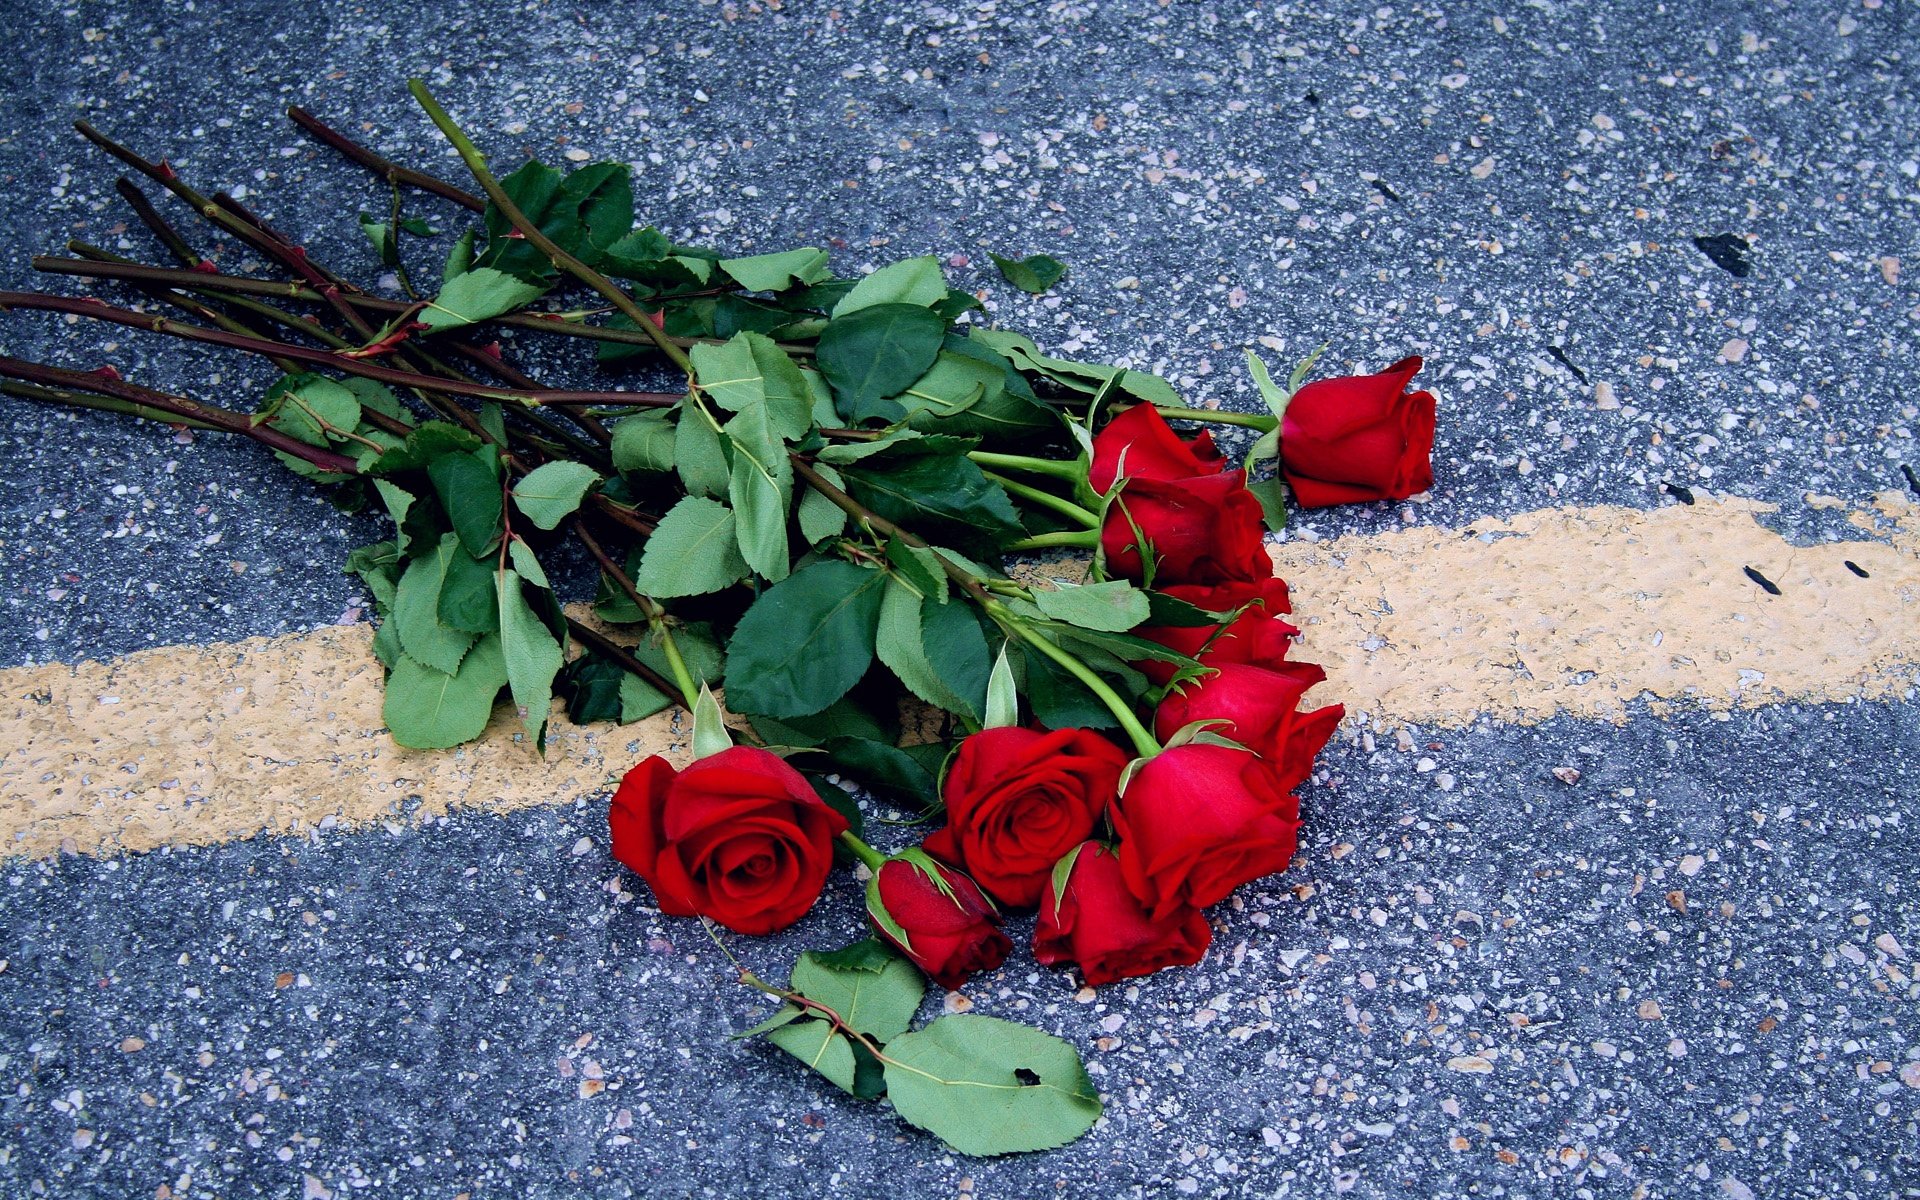 Разбитые цветы. Выброшенные цветы. Выброшенный букет цветов. Выброшенные розы. Розы на полу.